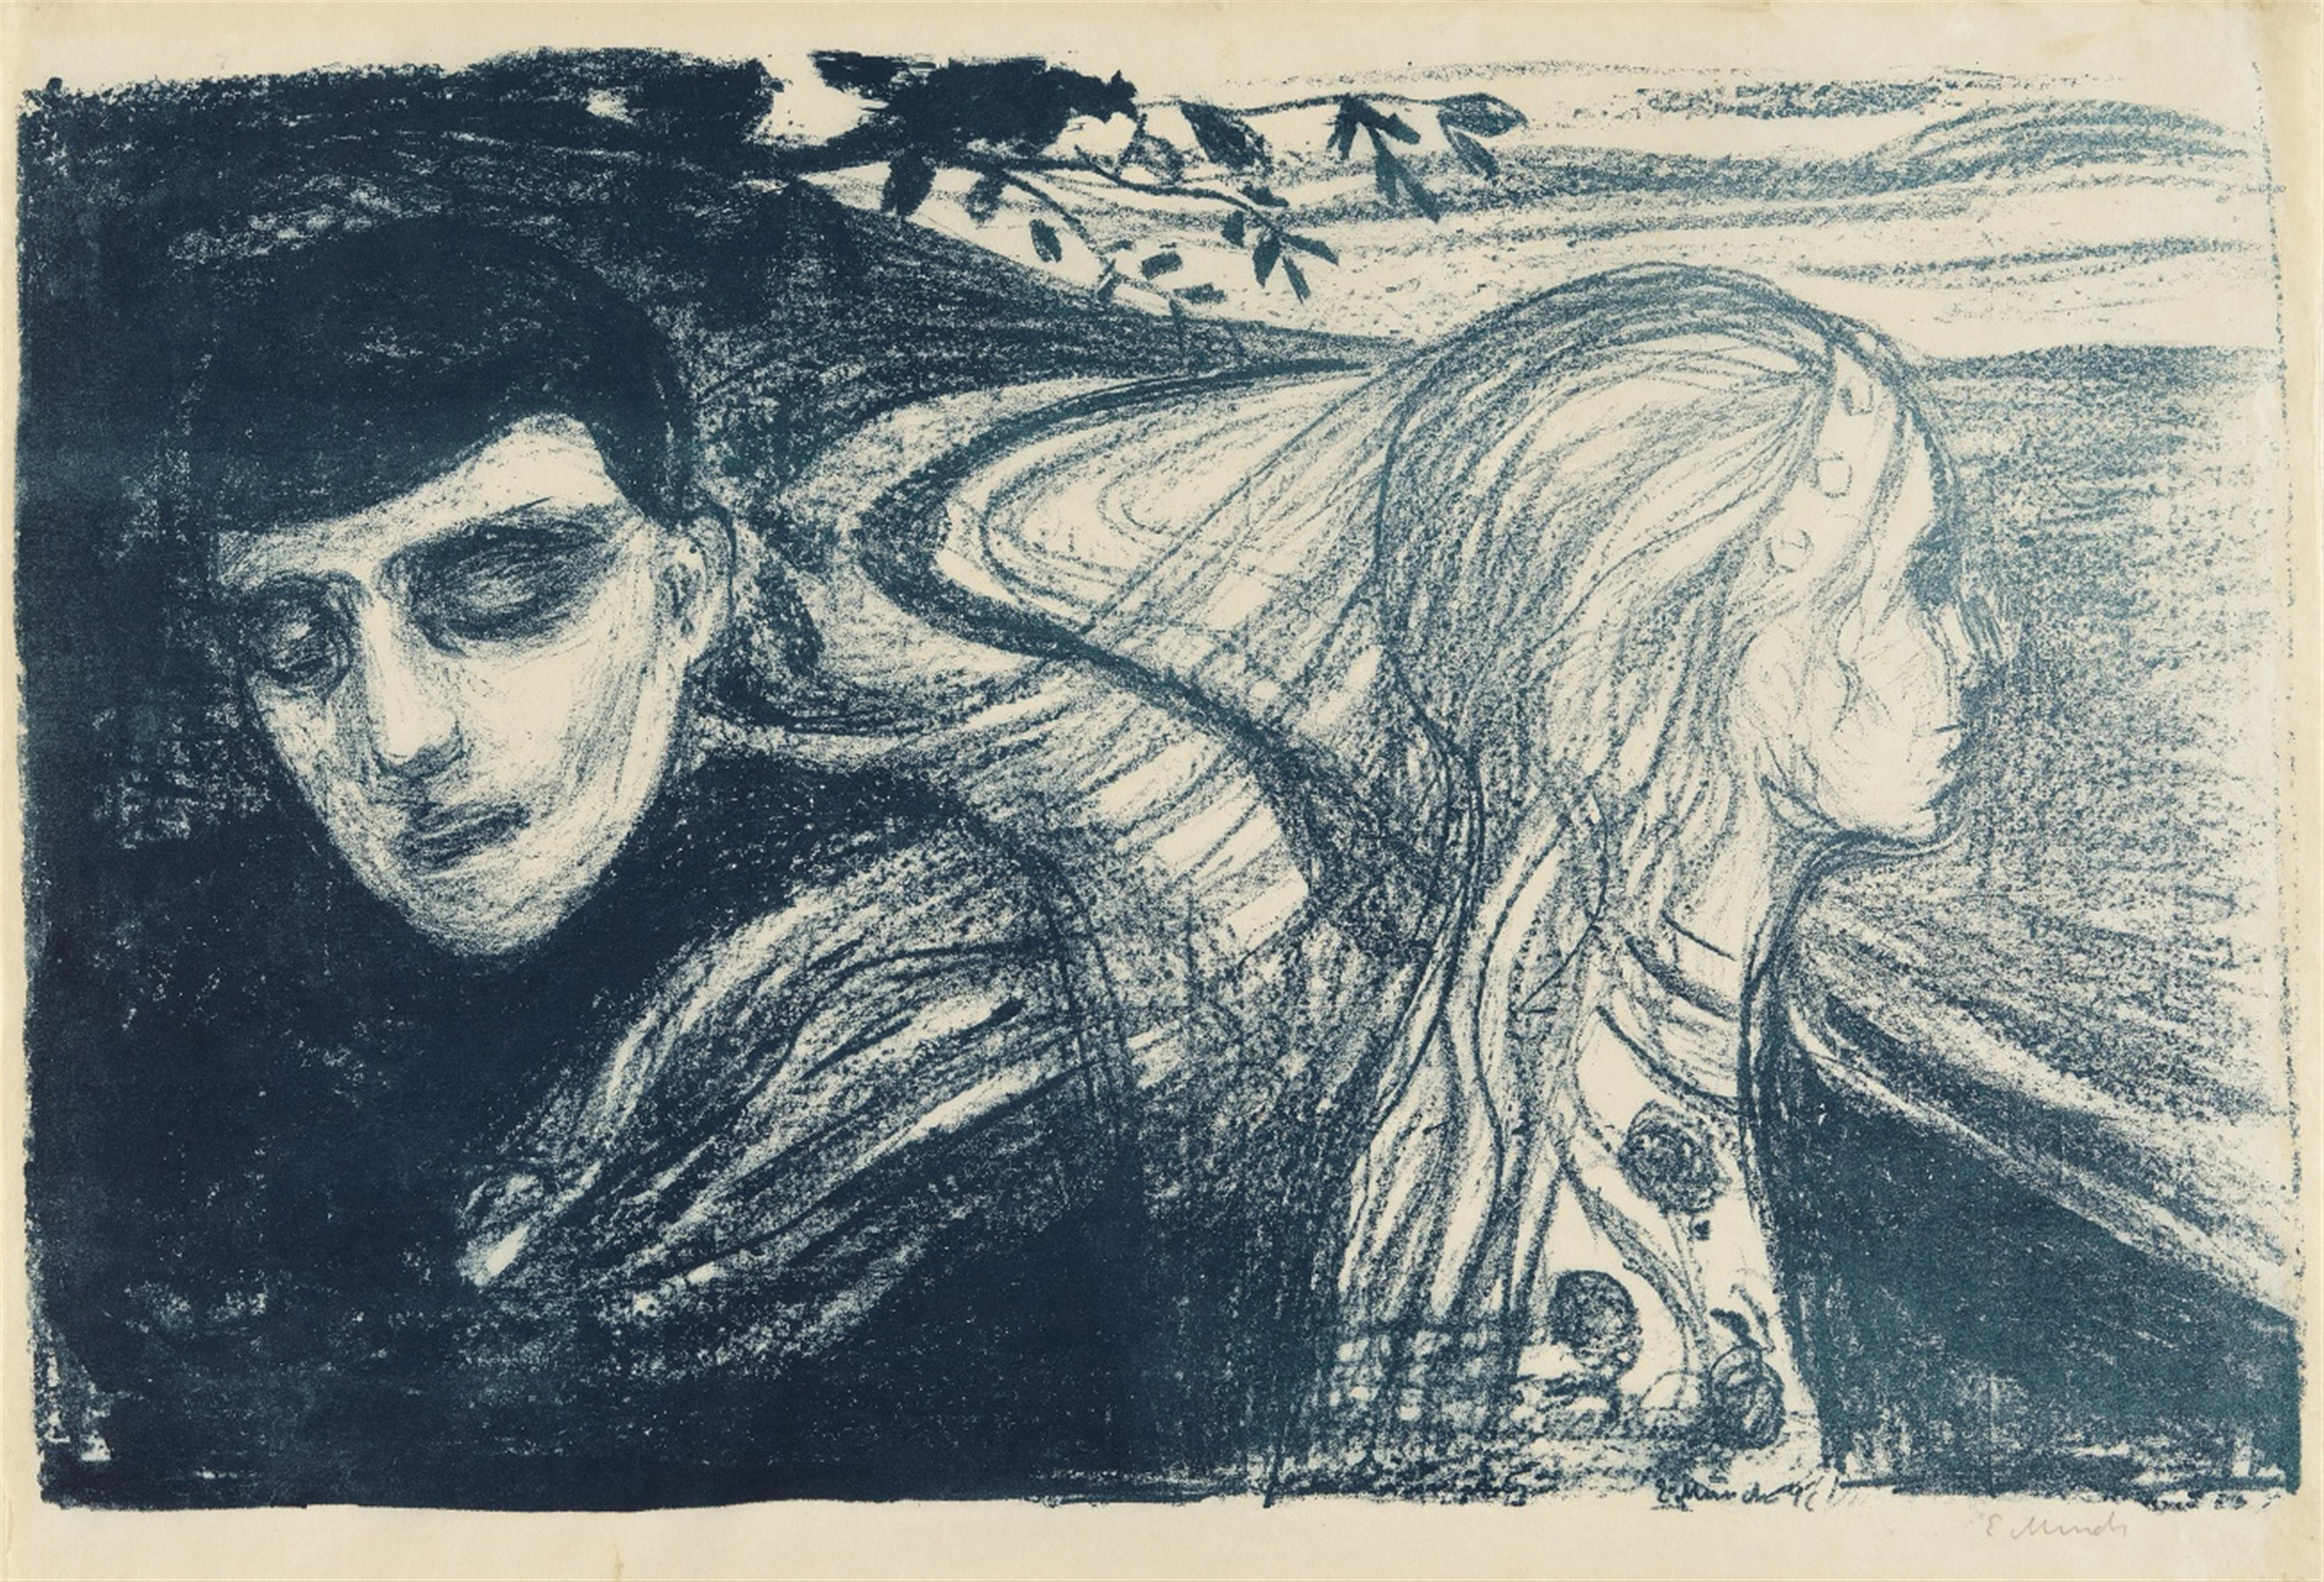 Edvard Munch - Loslösung II (Separation II) - image-1